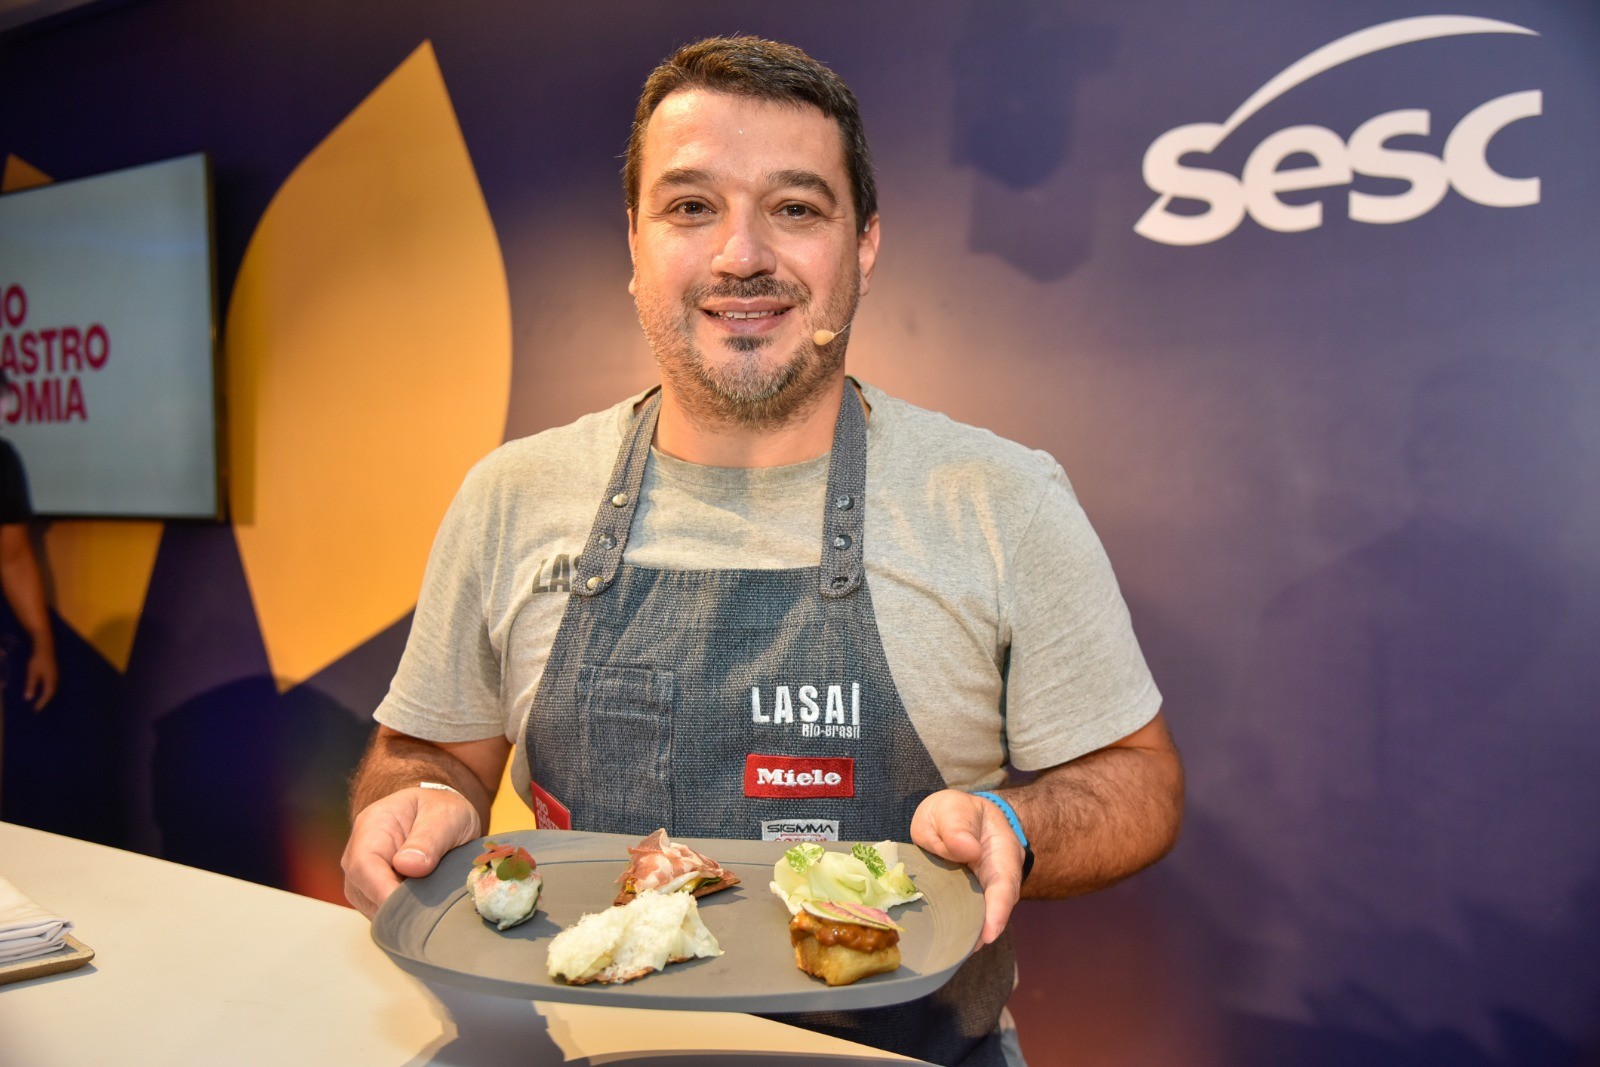 Rafa Costa e Silva (Lasai), chef do ano do Prêmio Rio Show de Gastronomia, deu aula no Rio Gastronomia — Foto: Bruno Kaiuca